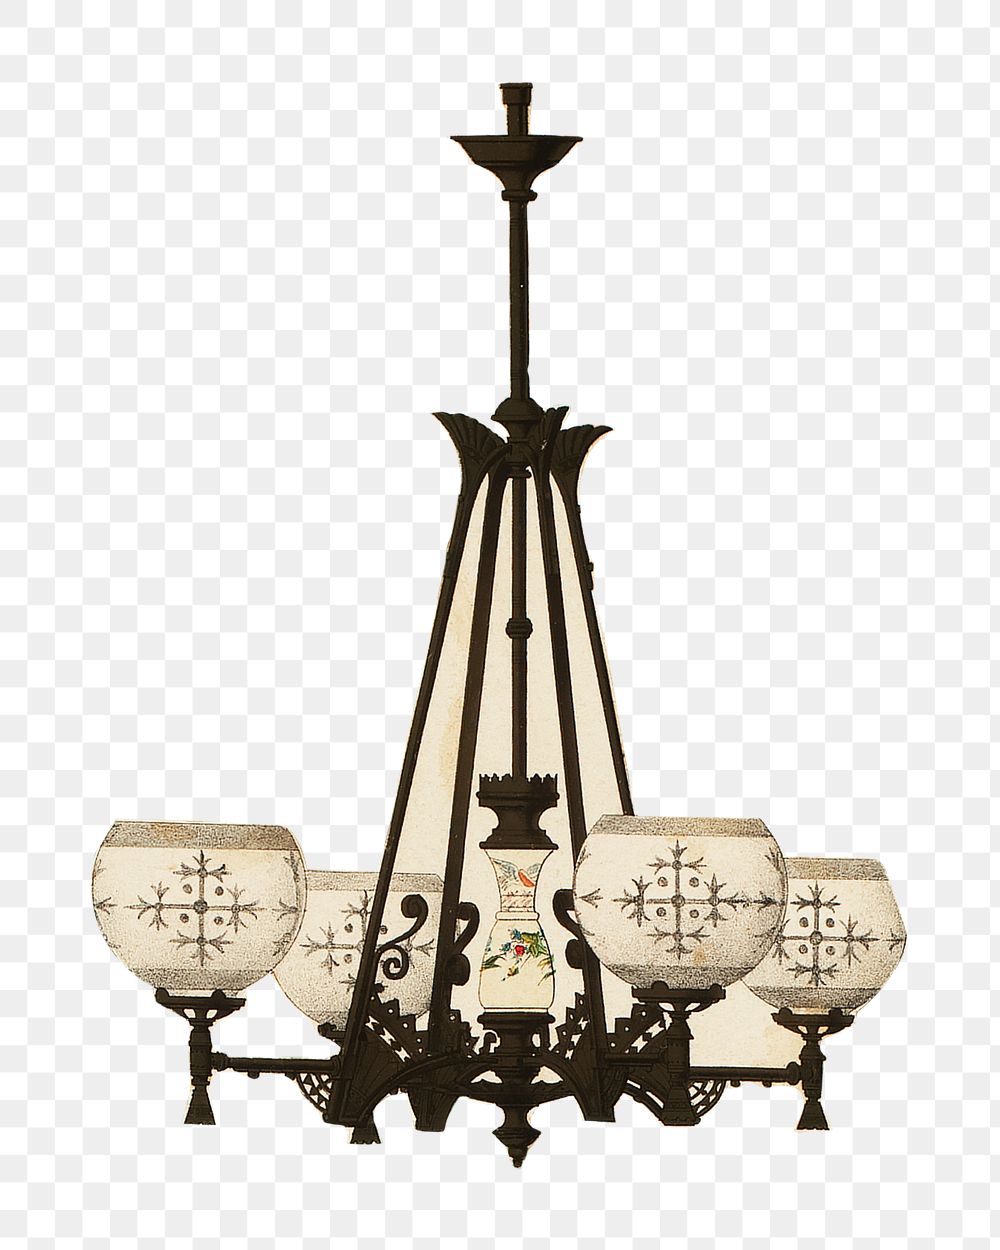 Victorian chandelier png vintage home decor sticker, transparent background. Remastered by rawpixel.